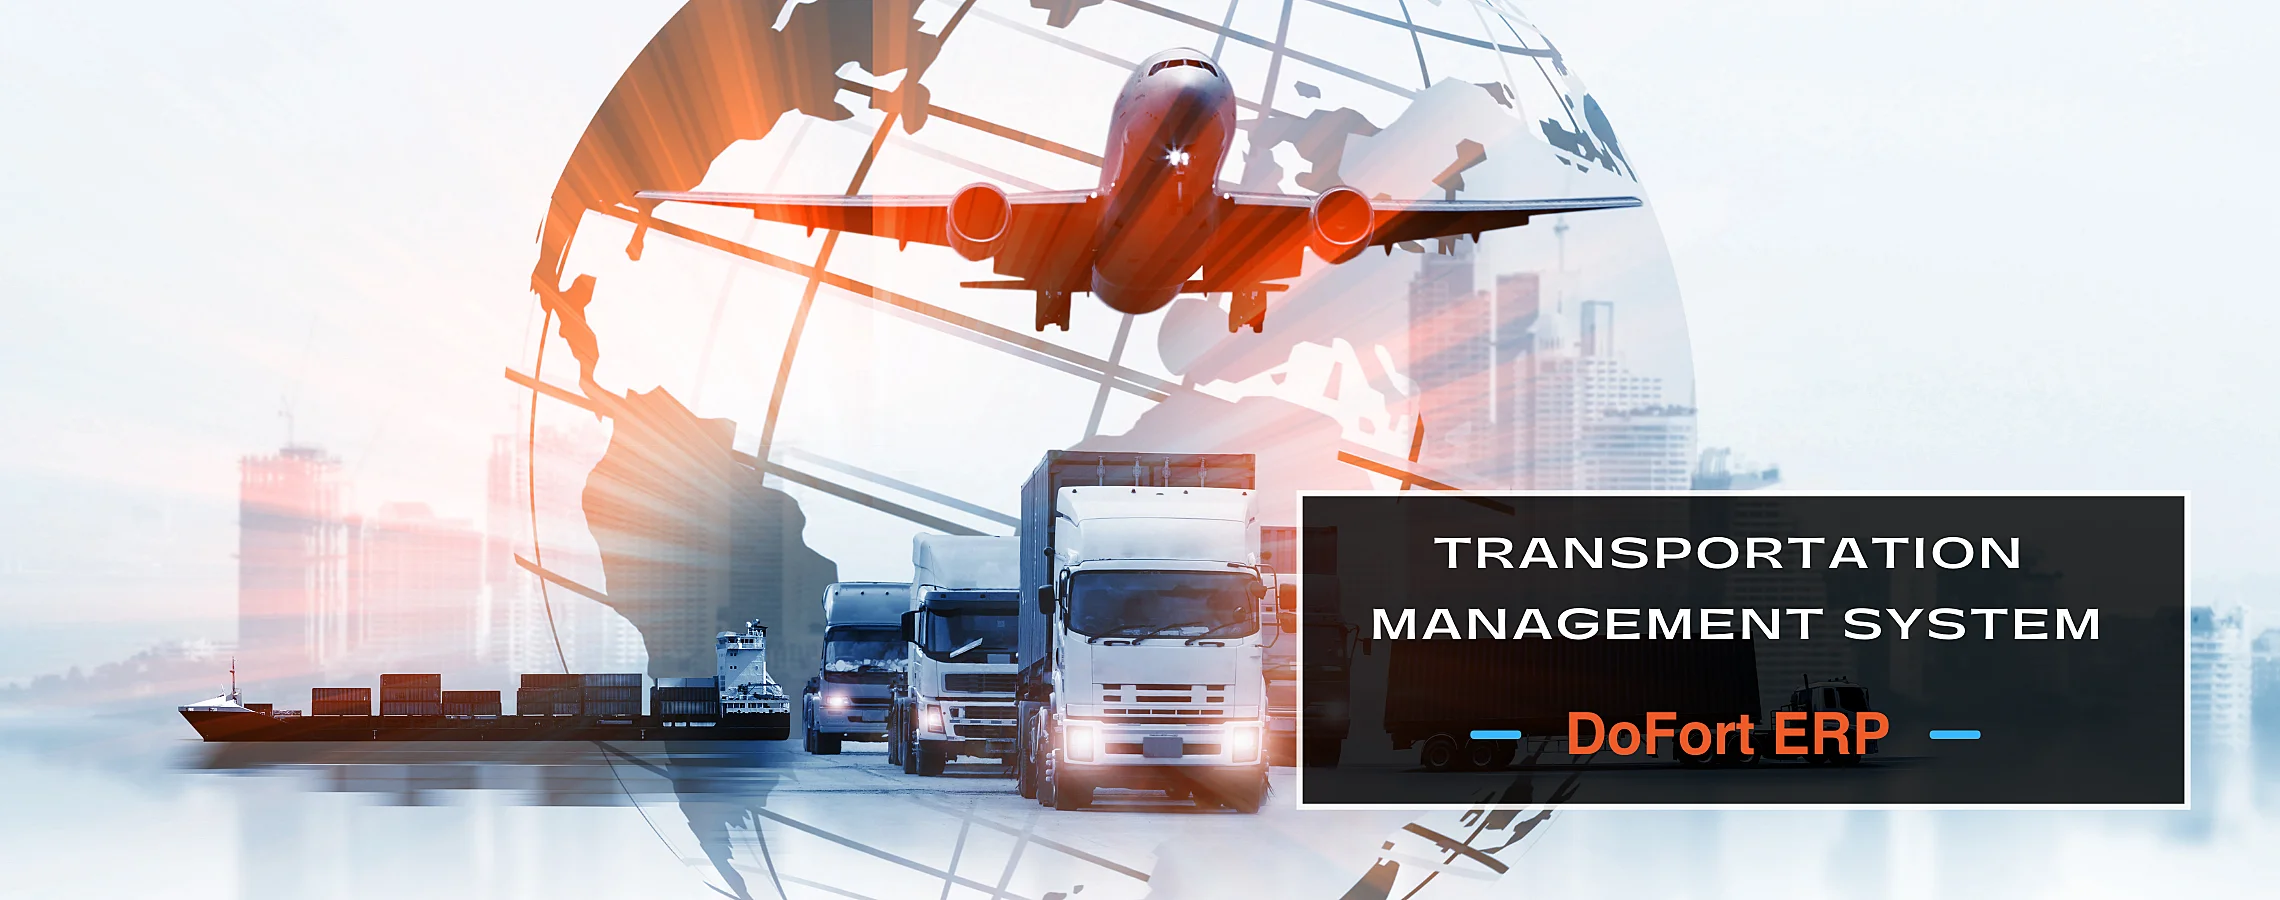 TransportationManagementSystem